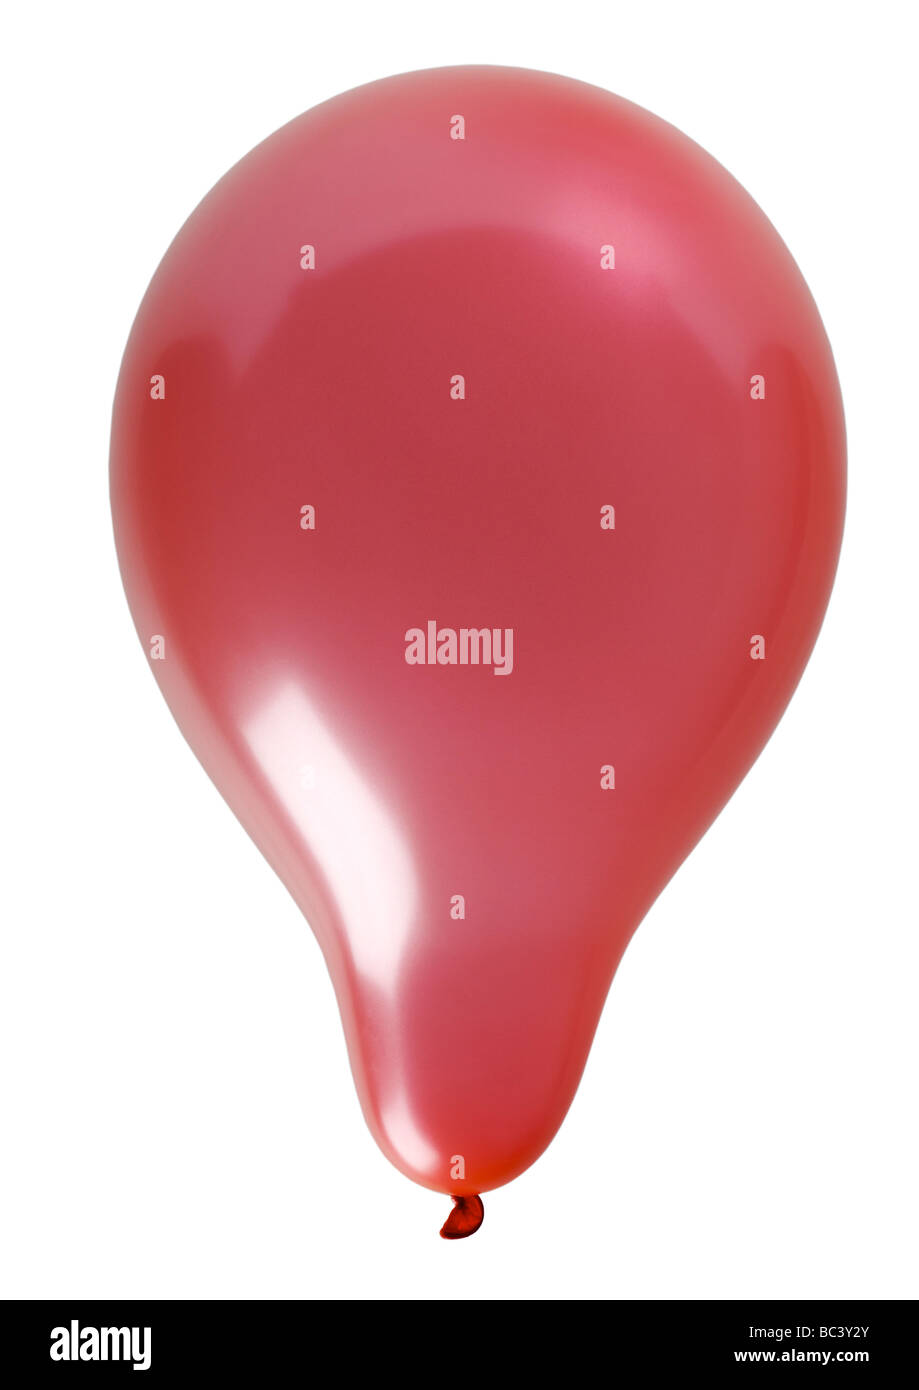 Red balloon on white background Stock Photo